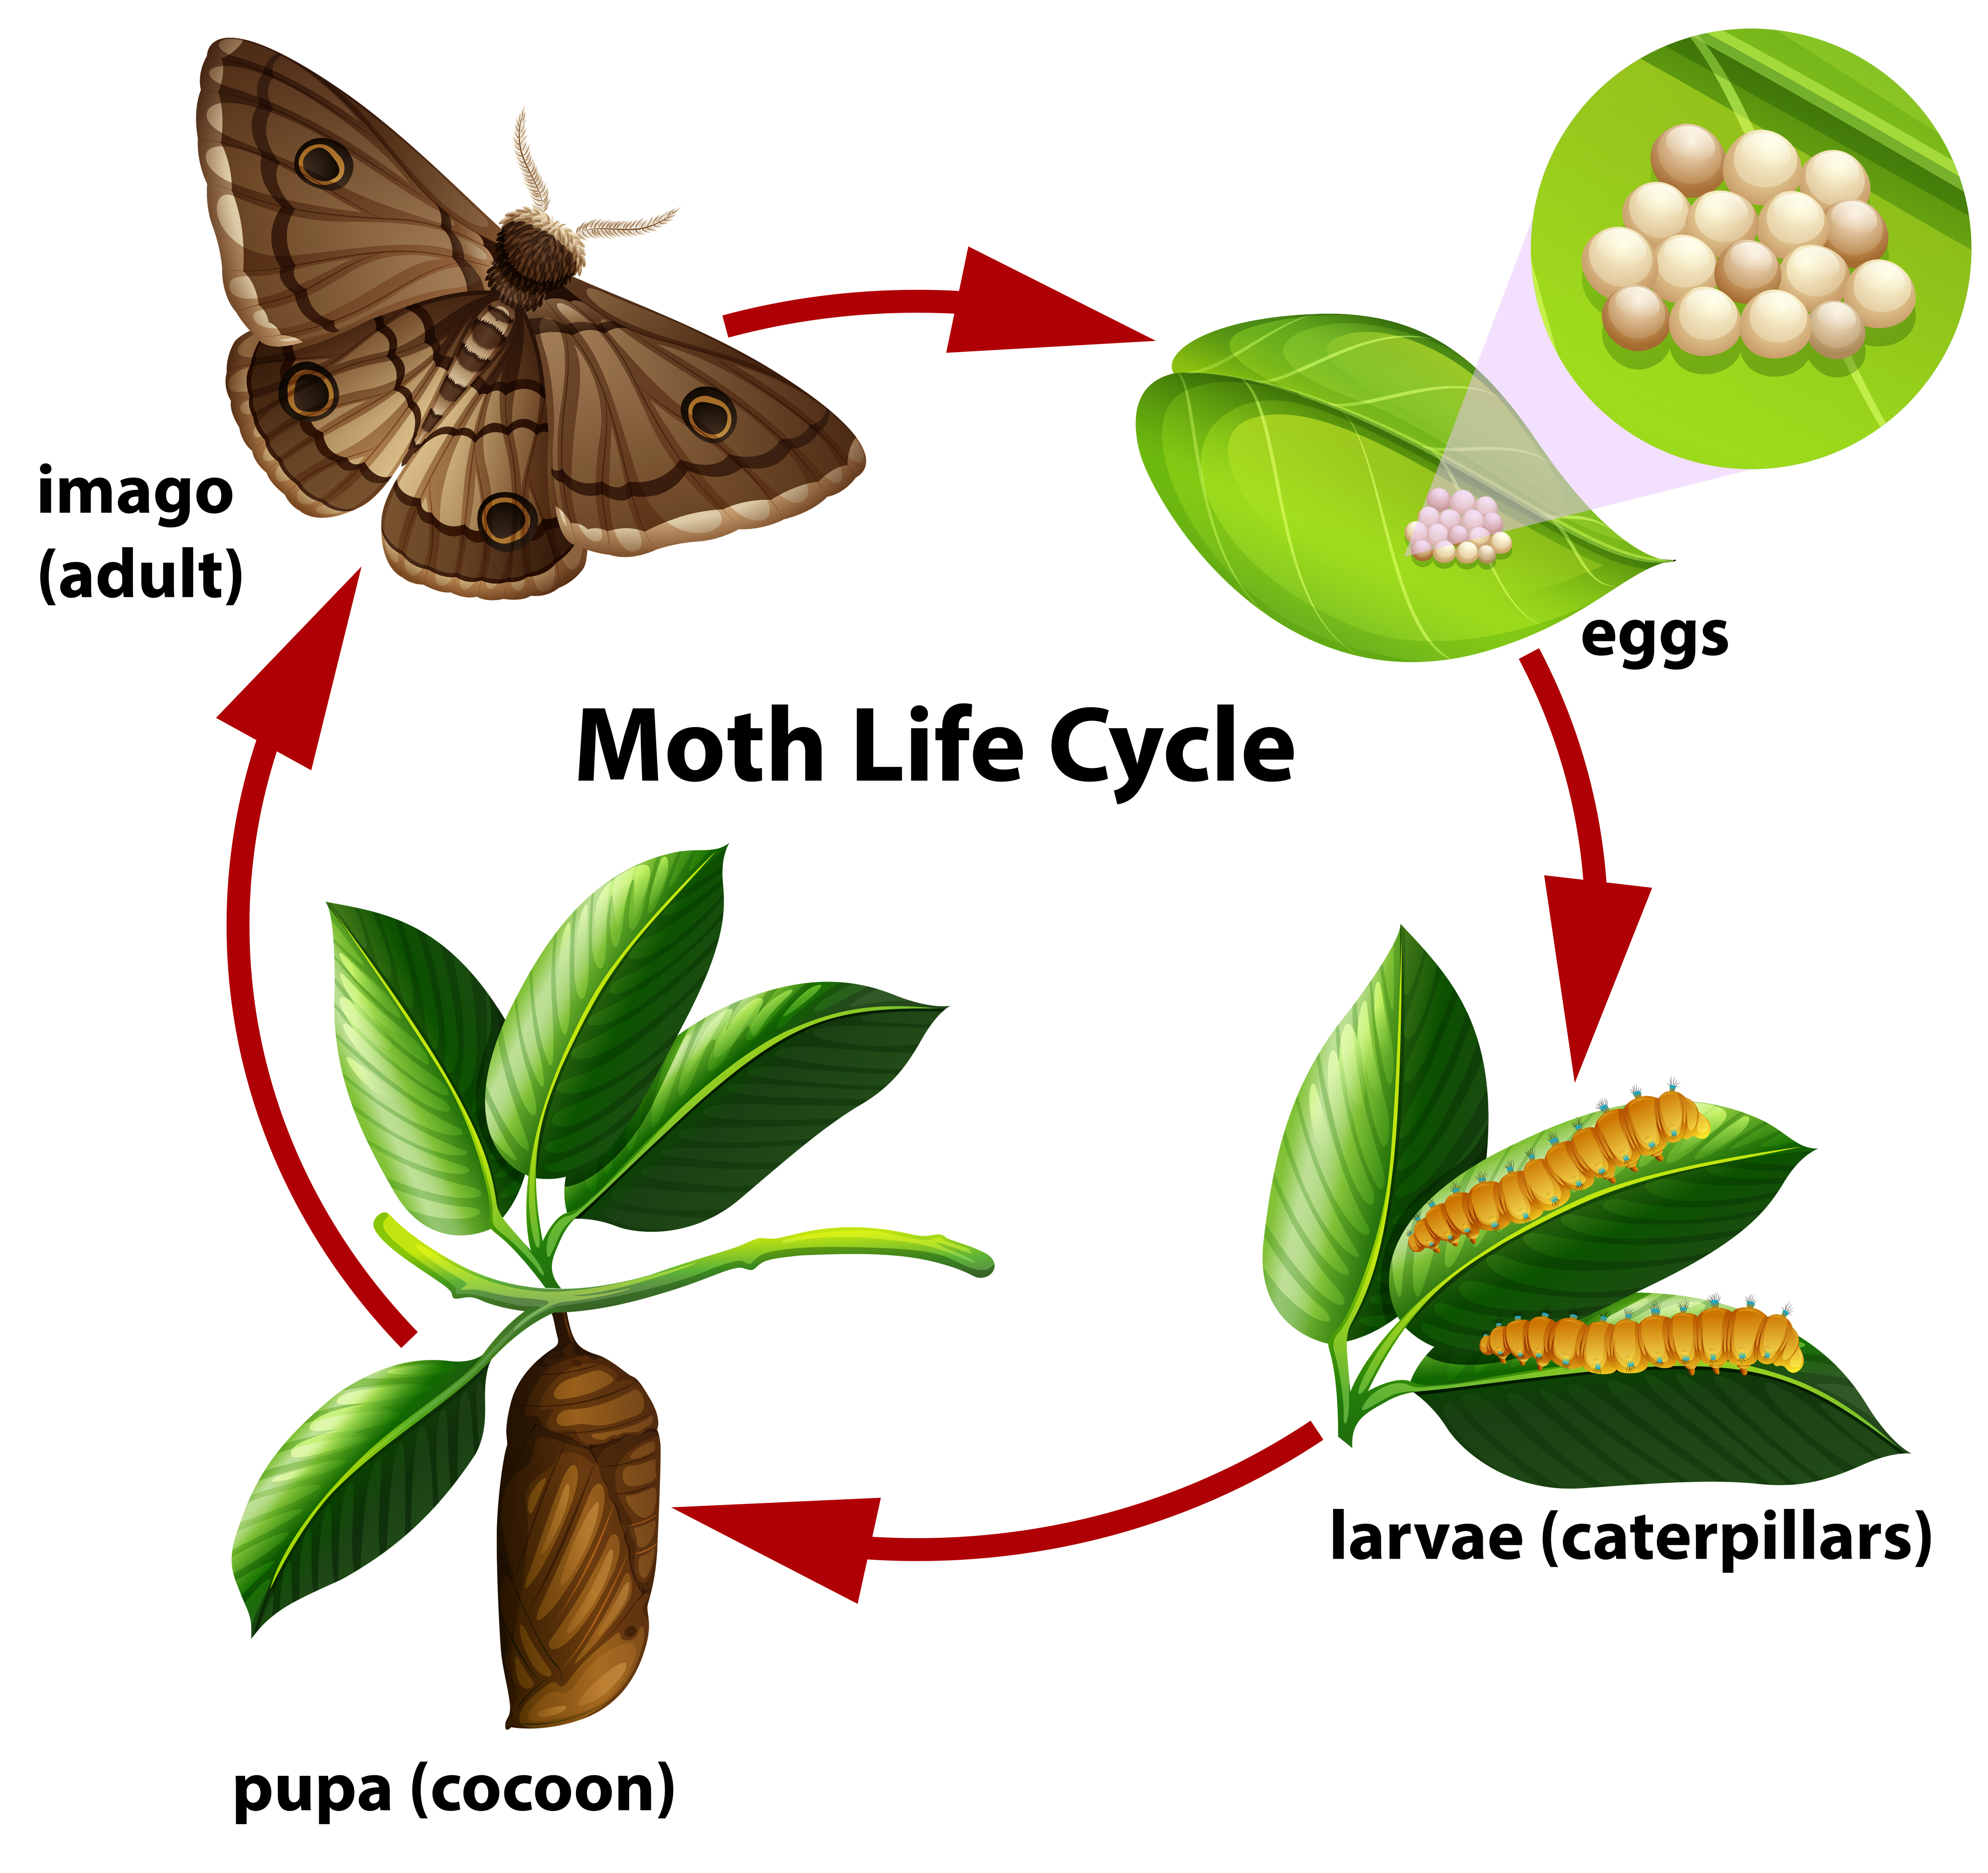 luna moth caterpillar stages